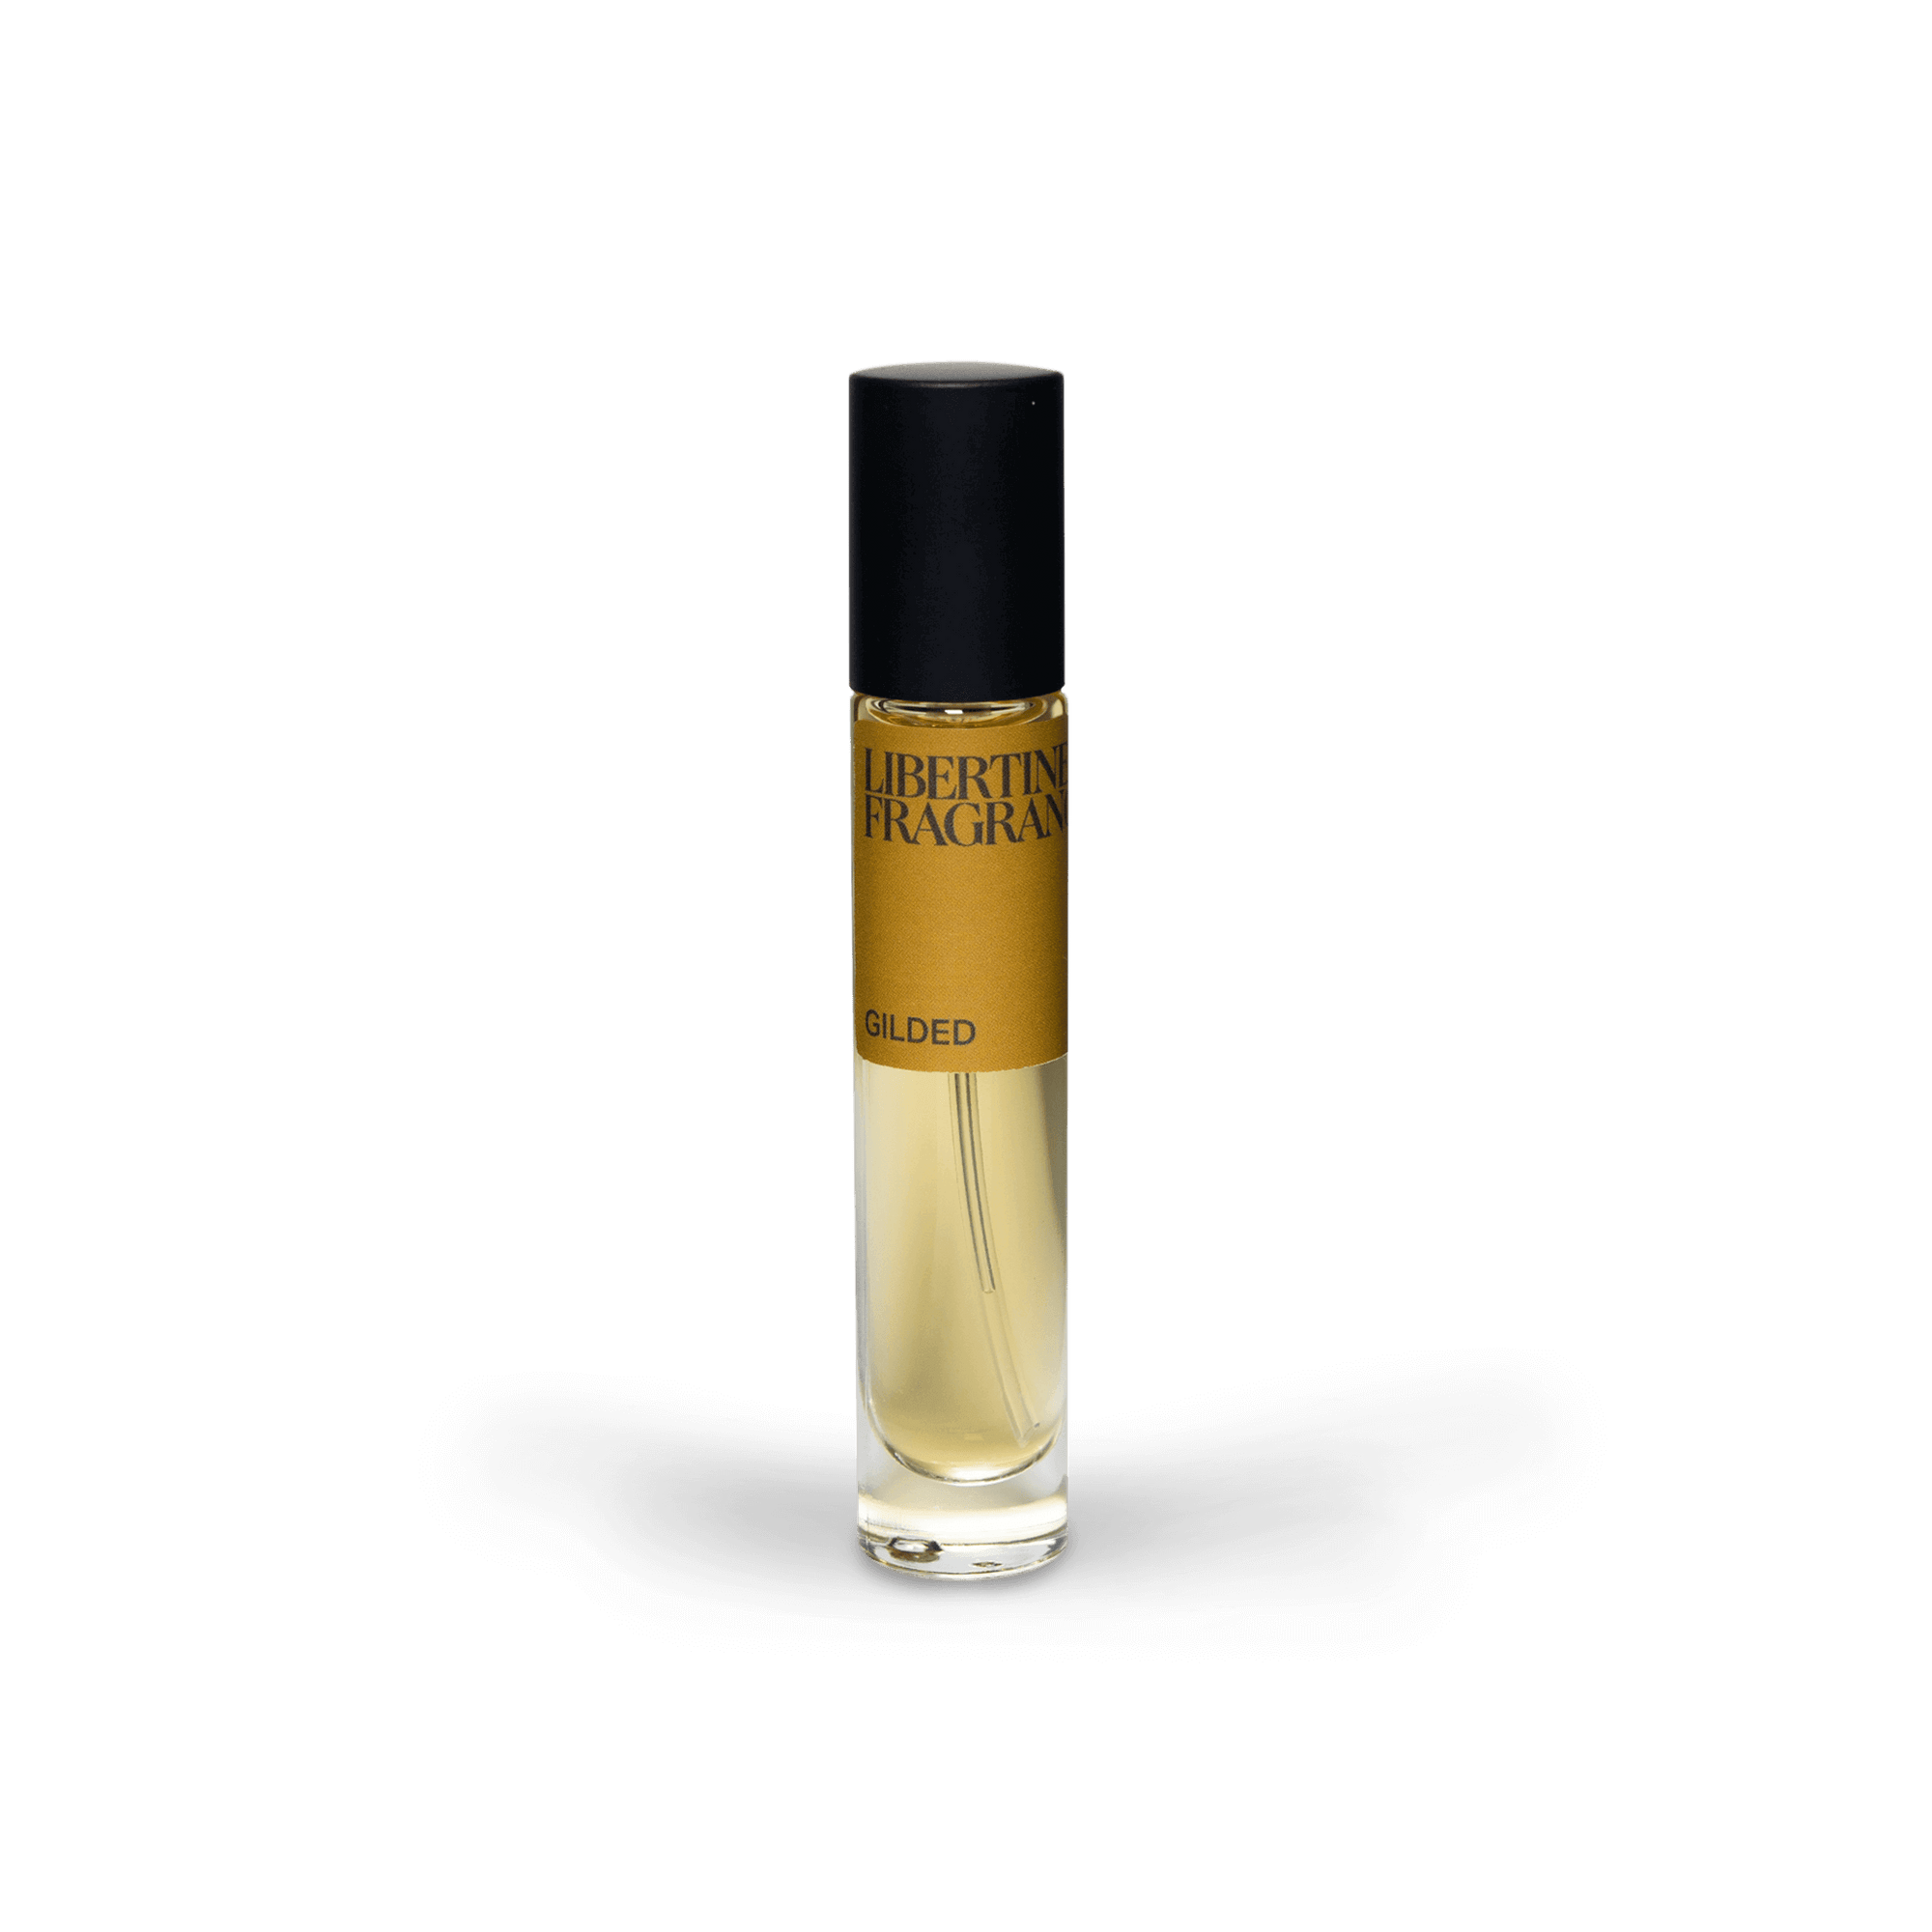 incense perfume by libertine fragrance